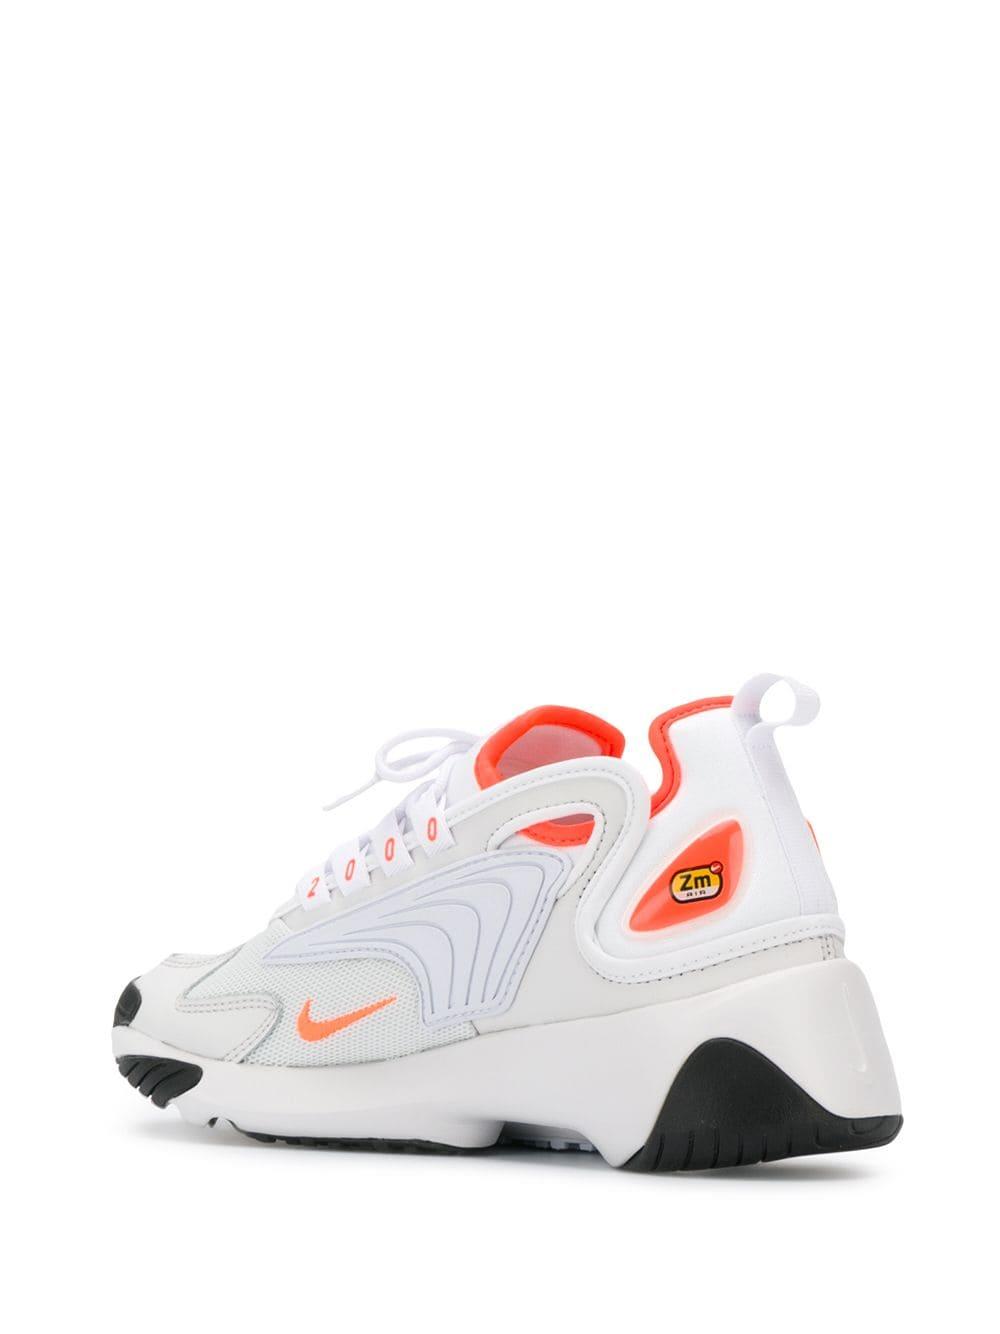 Nike Off-white And Orange Zoom 2k Sneakers | Lyst Australia